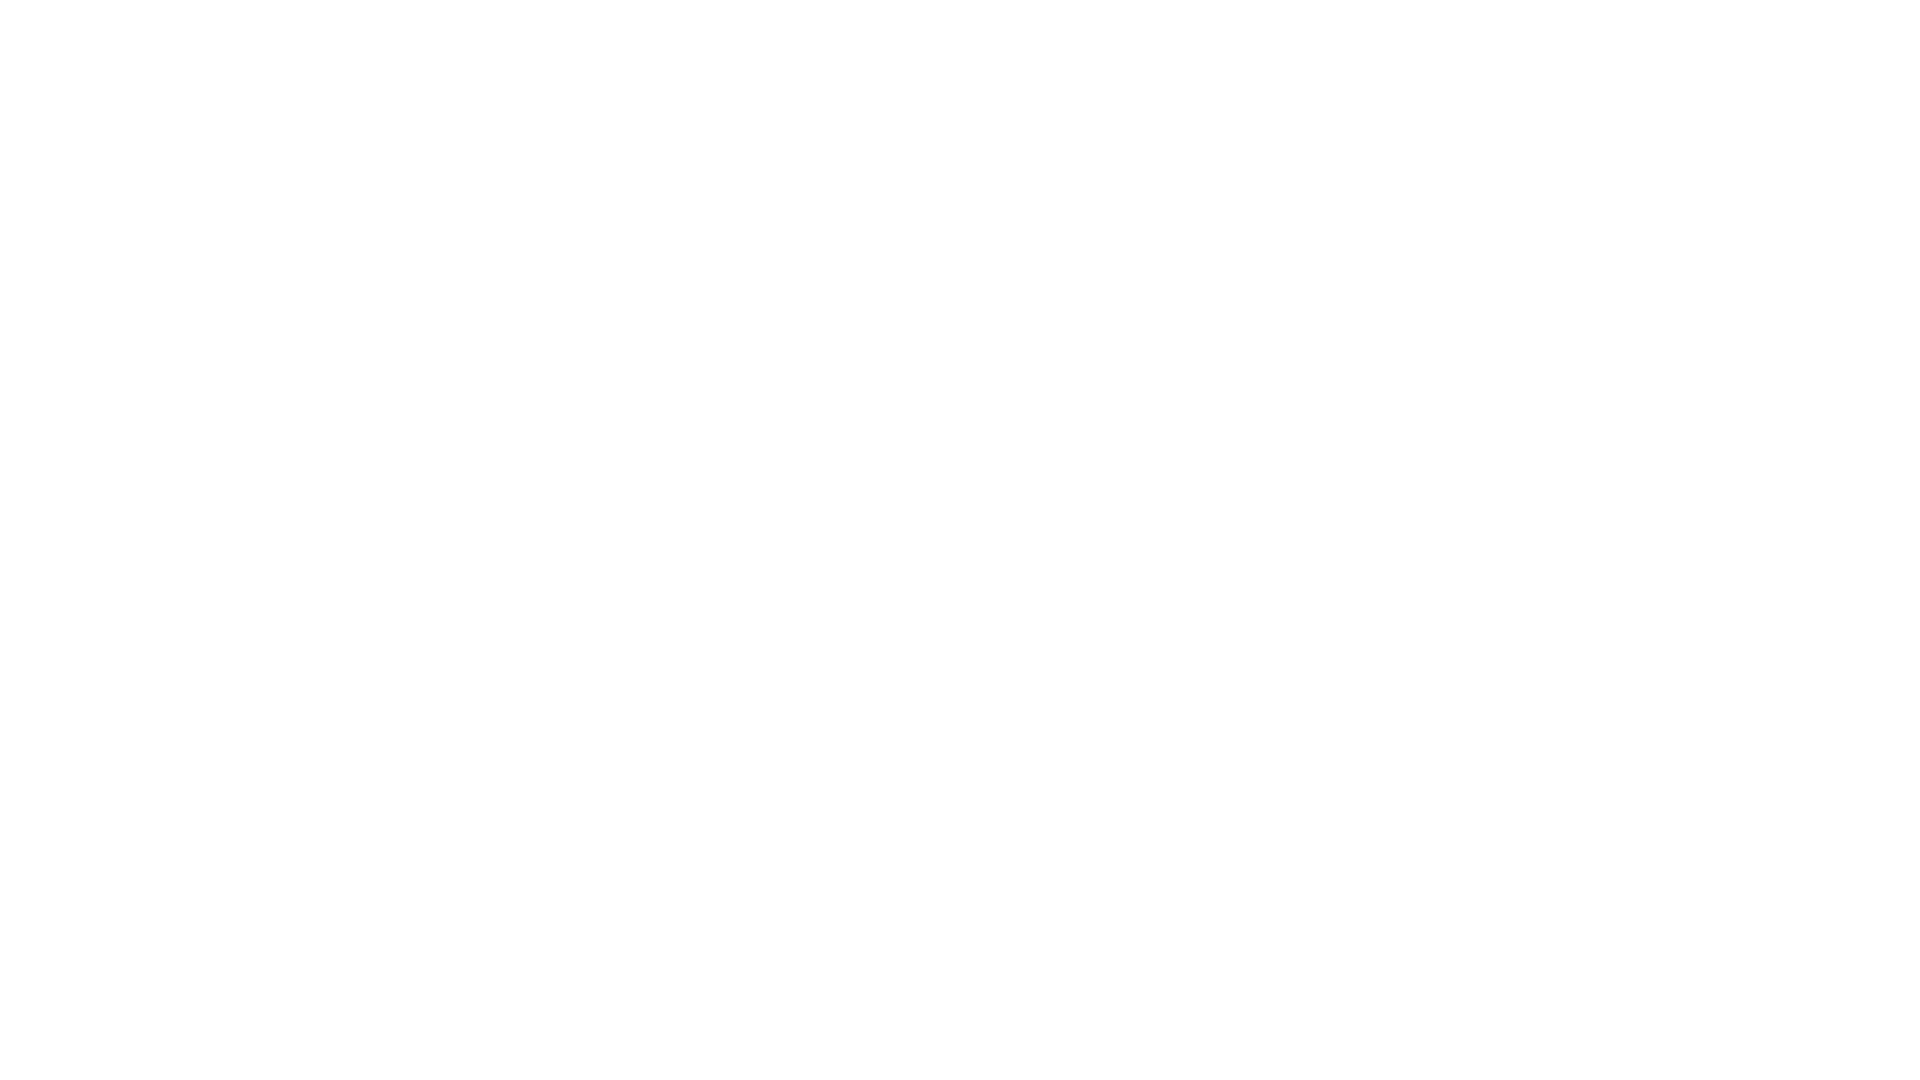 https://ilanzerbier.ch/wp-content/uploads/2020/04/ILANZERBIER_LOGO_WHITE-1.png